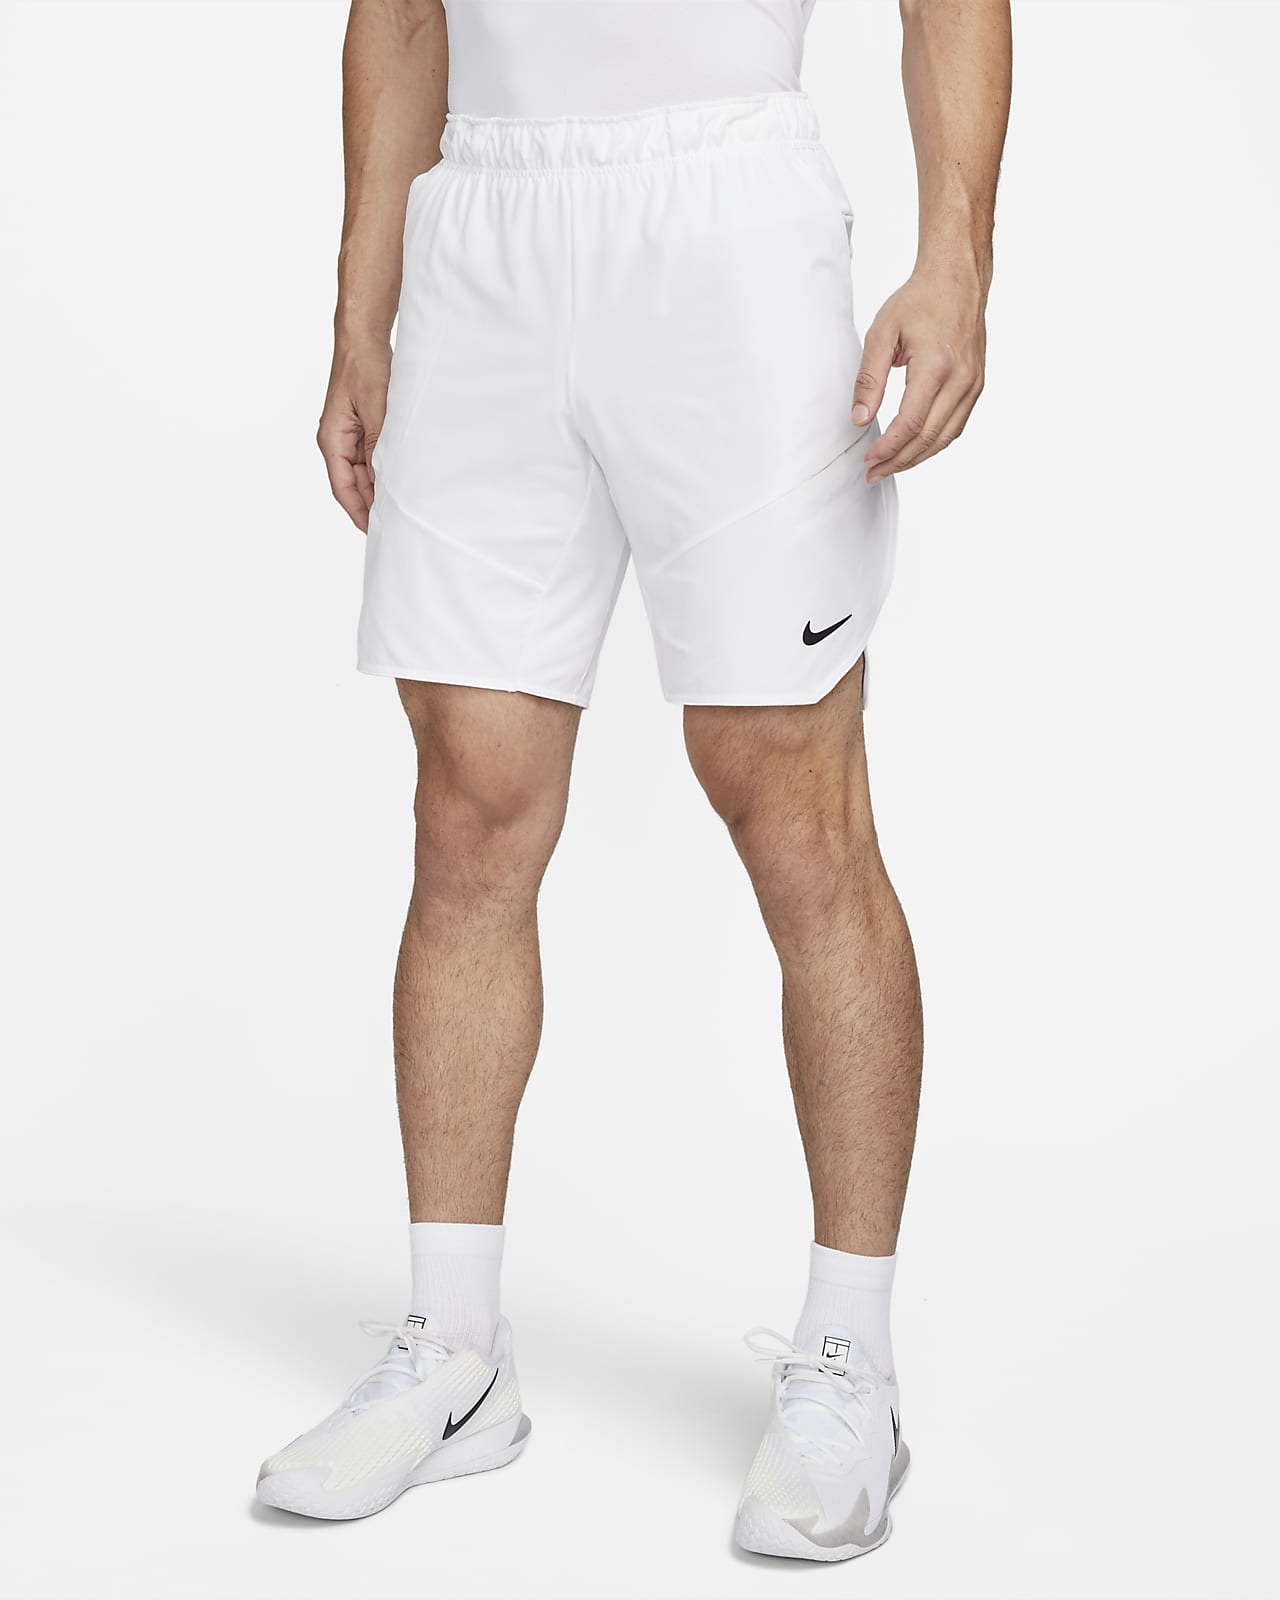 NikeCourt Dri-FIT Advantage Herren-Tennisshorts